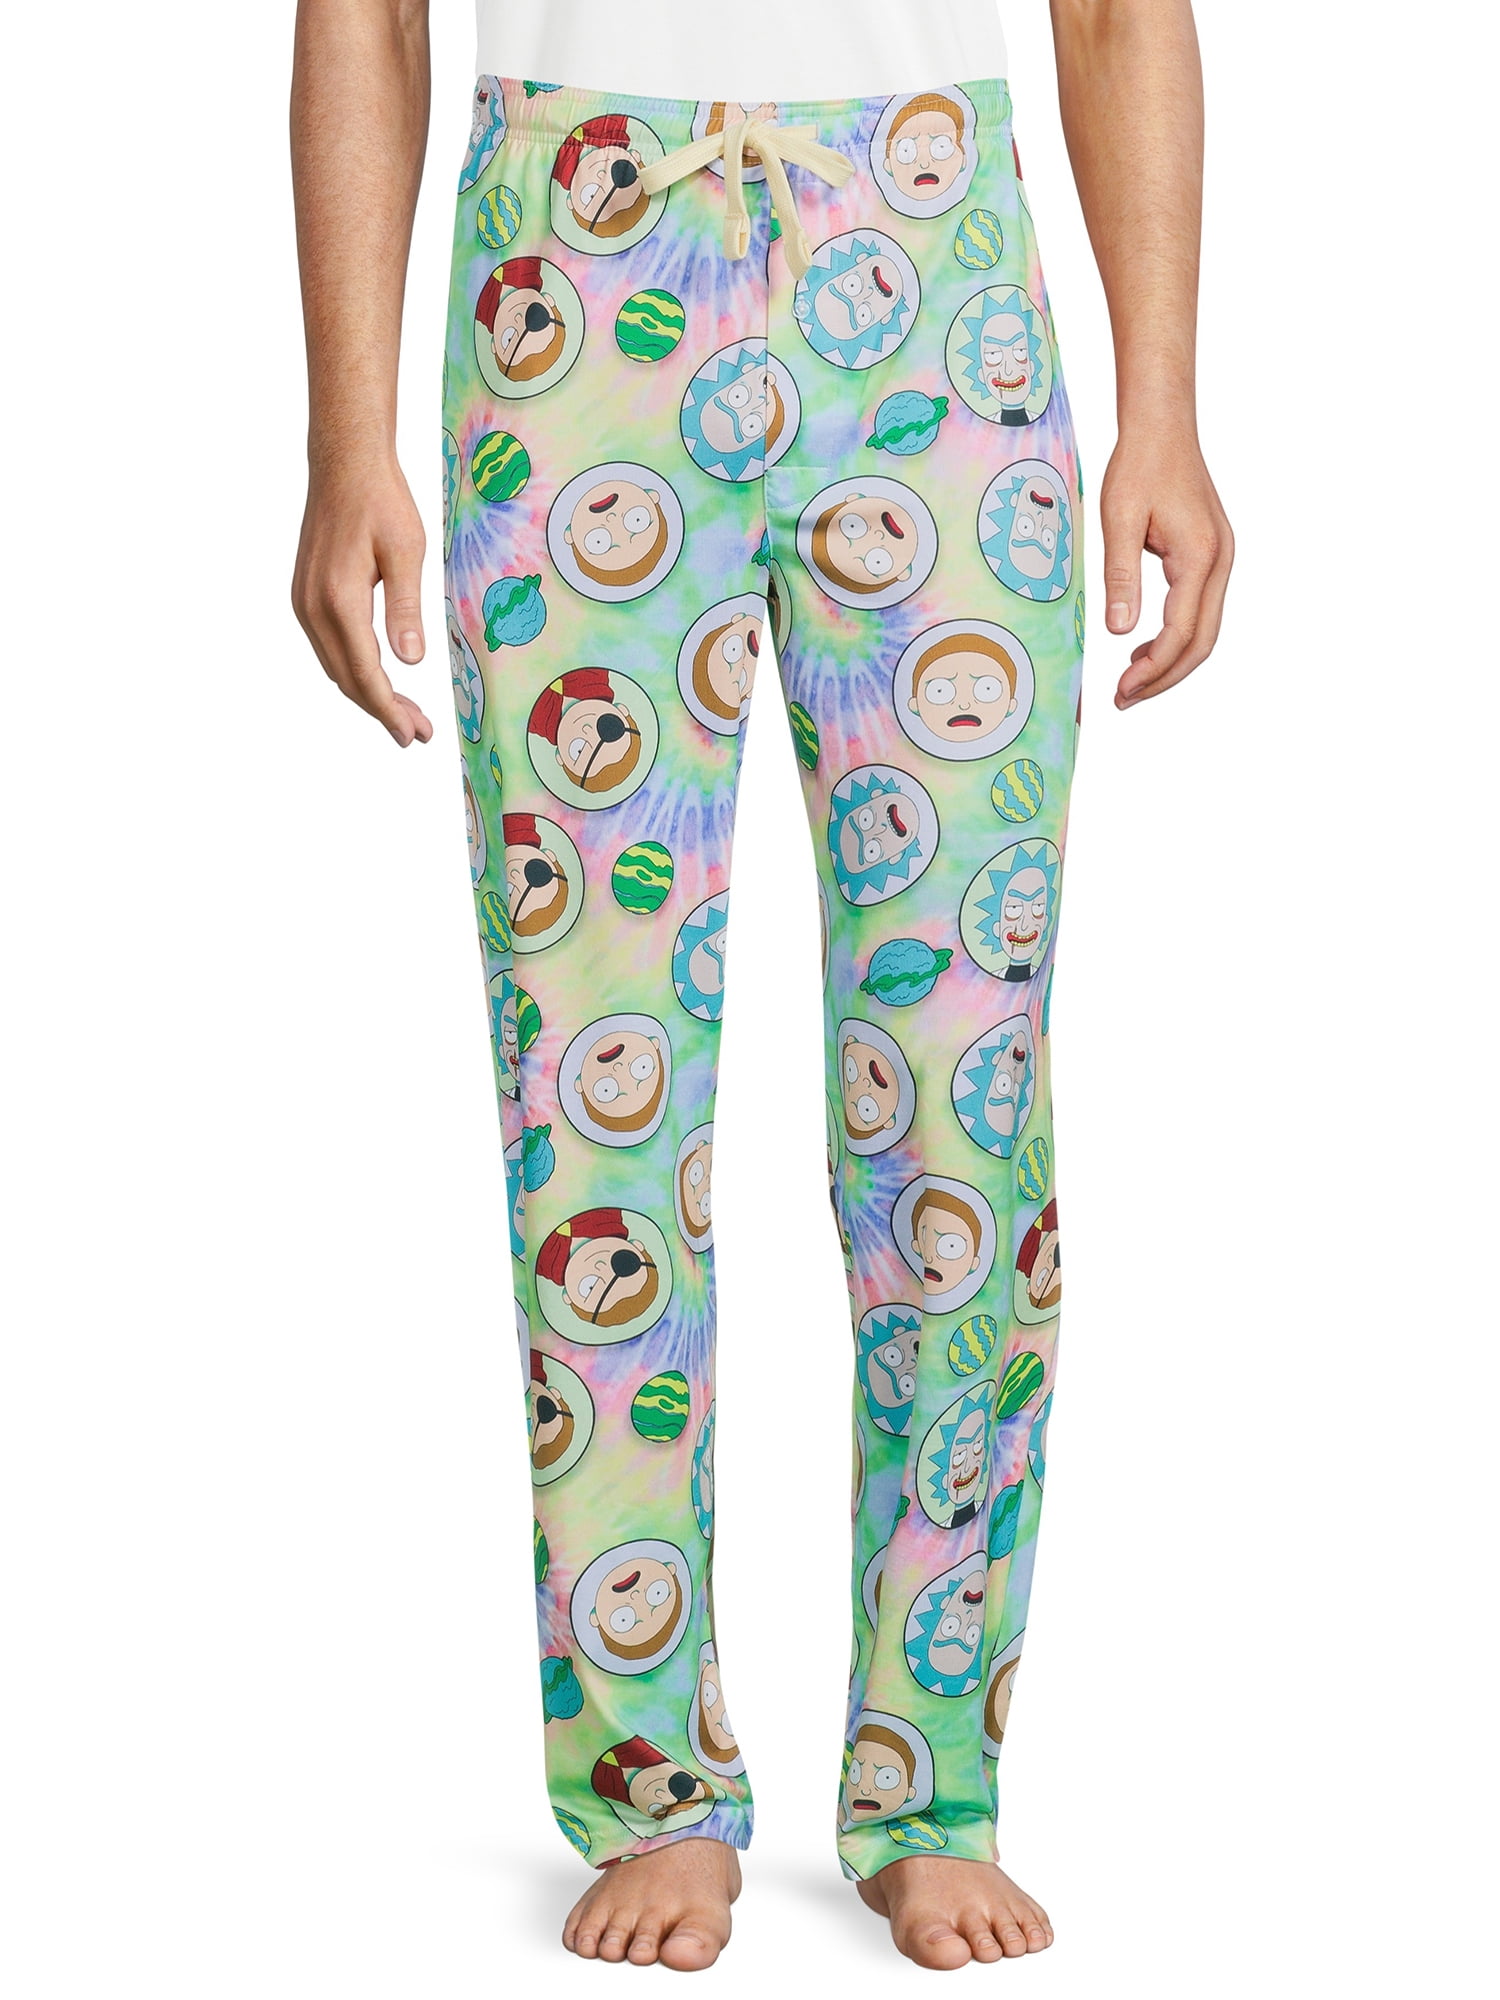 Rick and Morty Men's Print Sleep Pants, Sizes S-3XL - Walmart.com